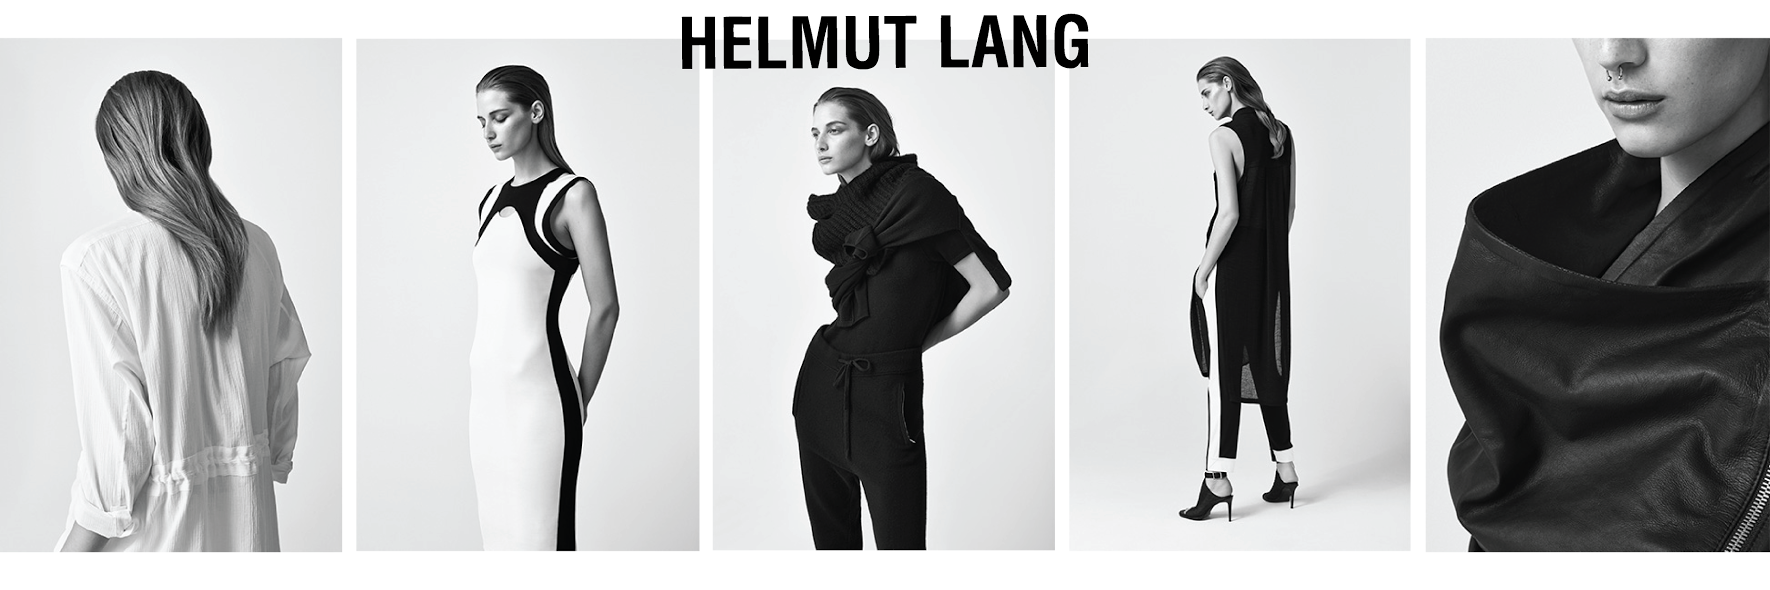 Helmut Lang – Design & Culture by Ed